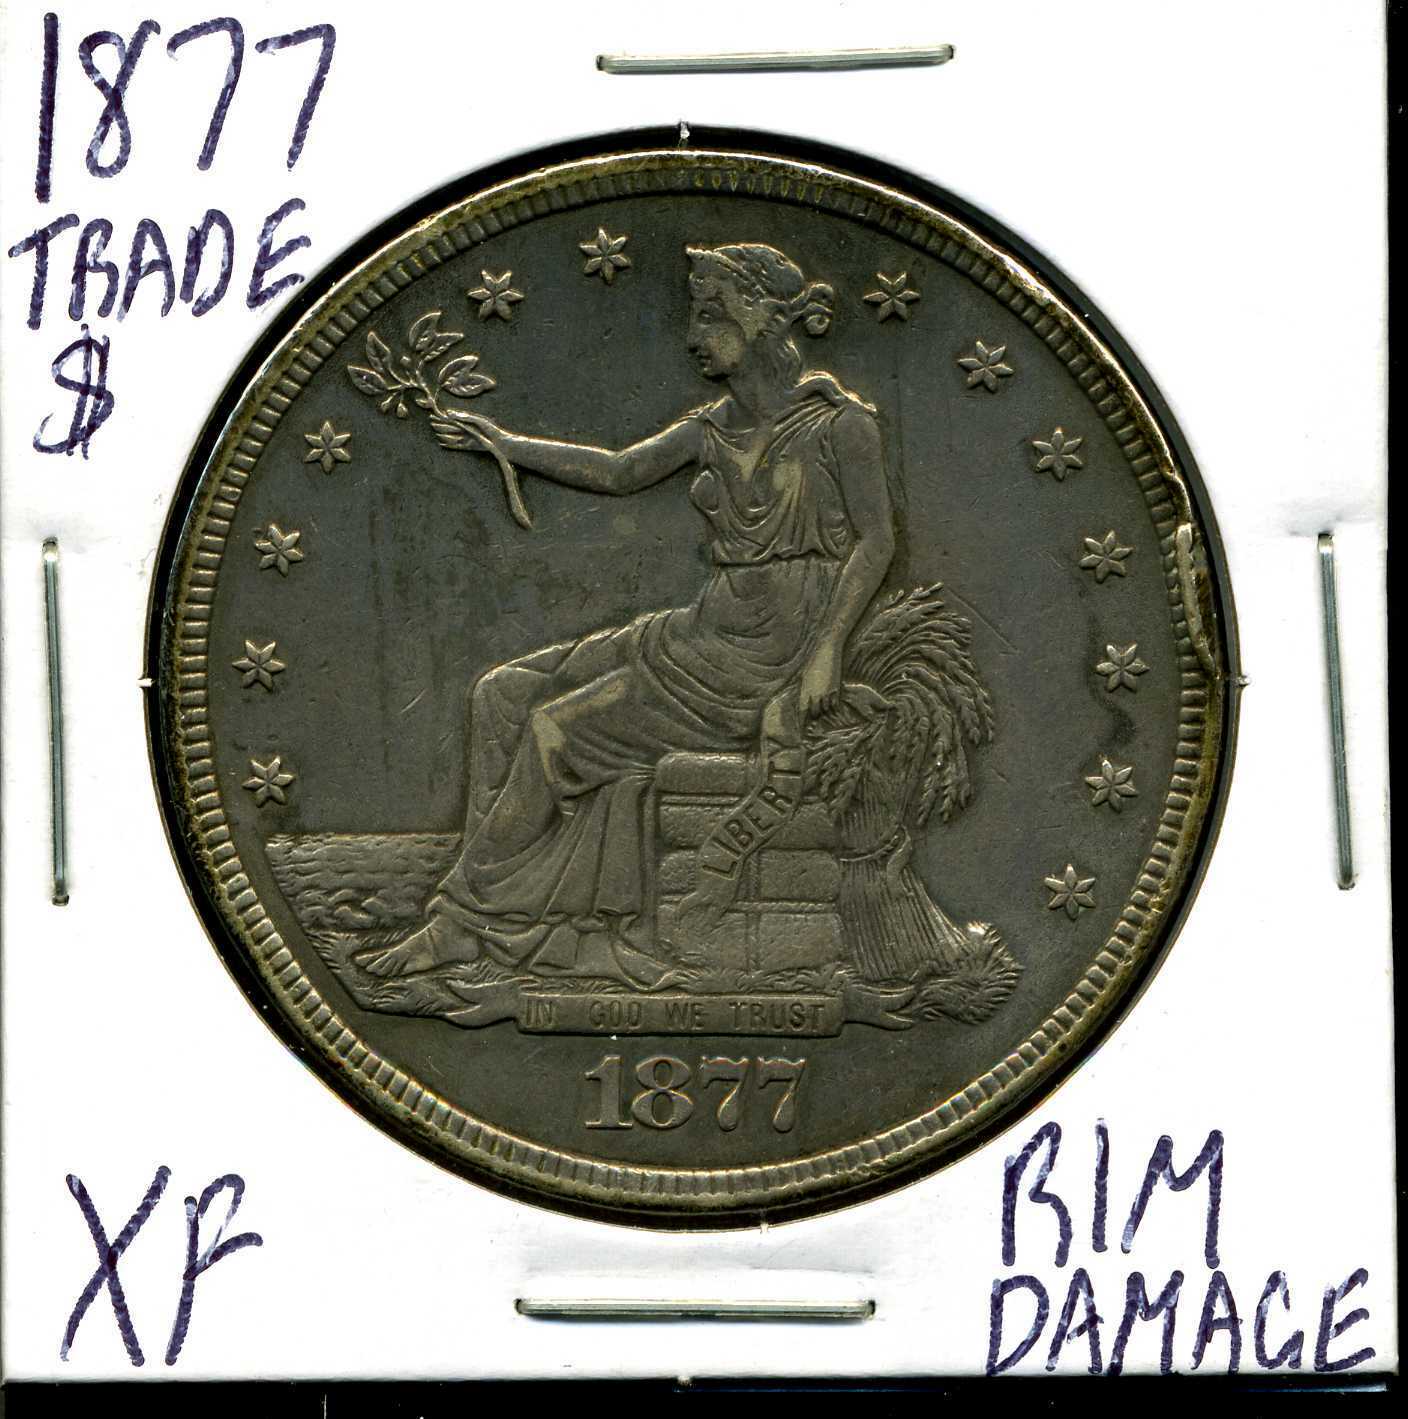 1877 $1 Trade Silver Dollar with XF Detail Rim Damage #05197